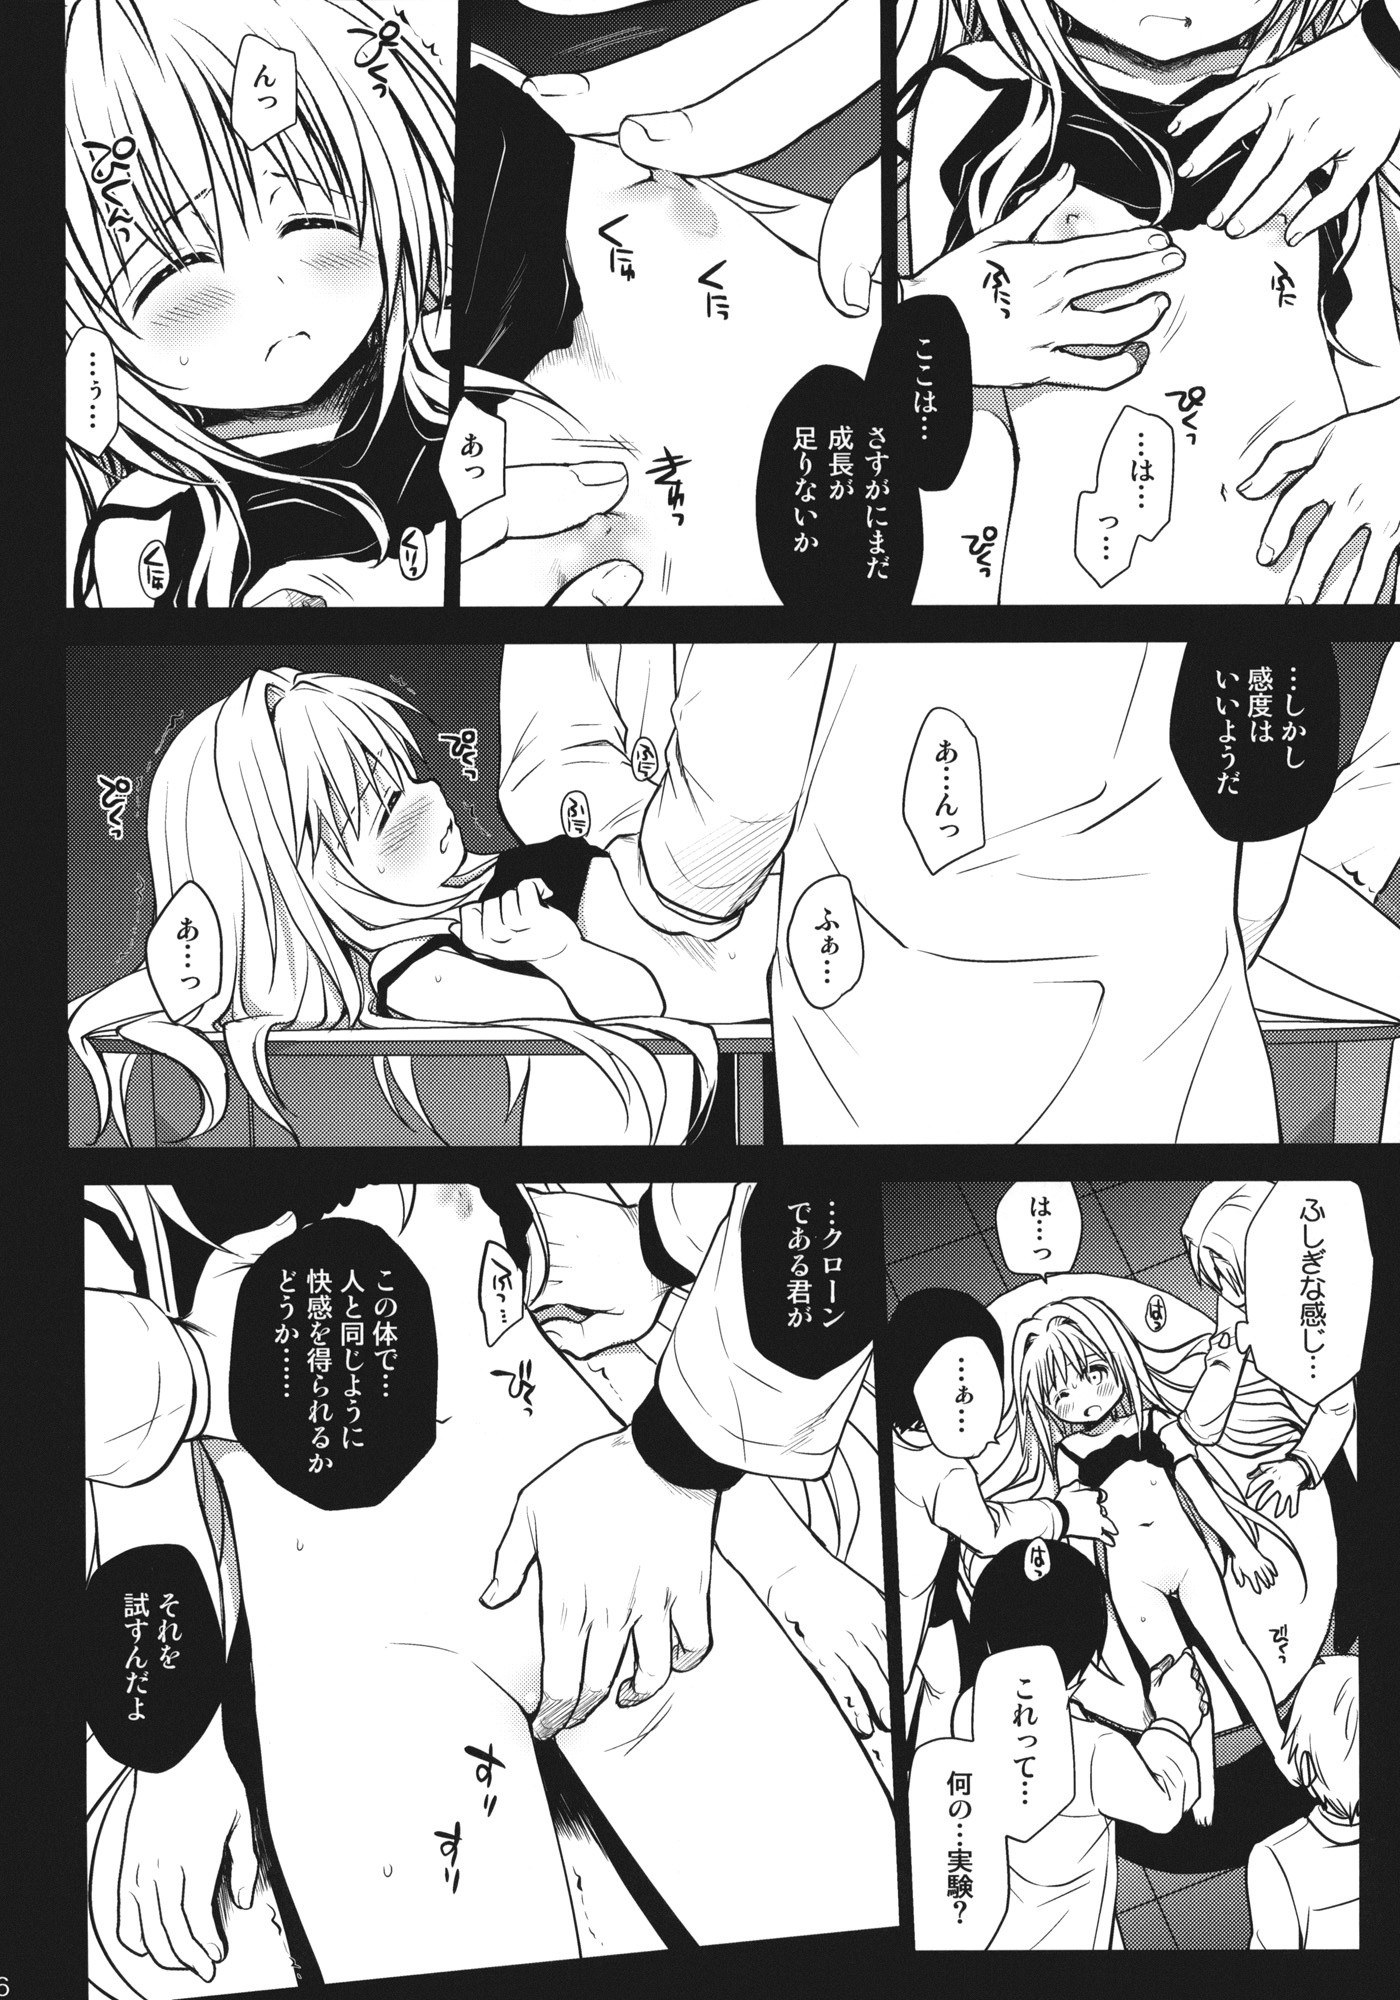 Eve no Yami hentai manga picture 4